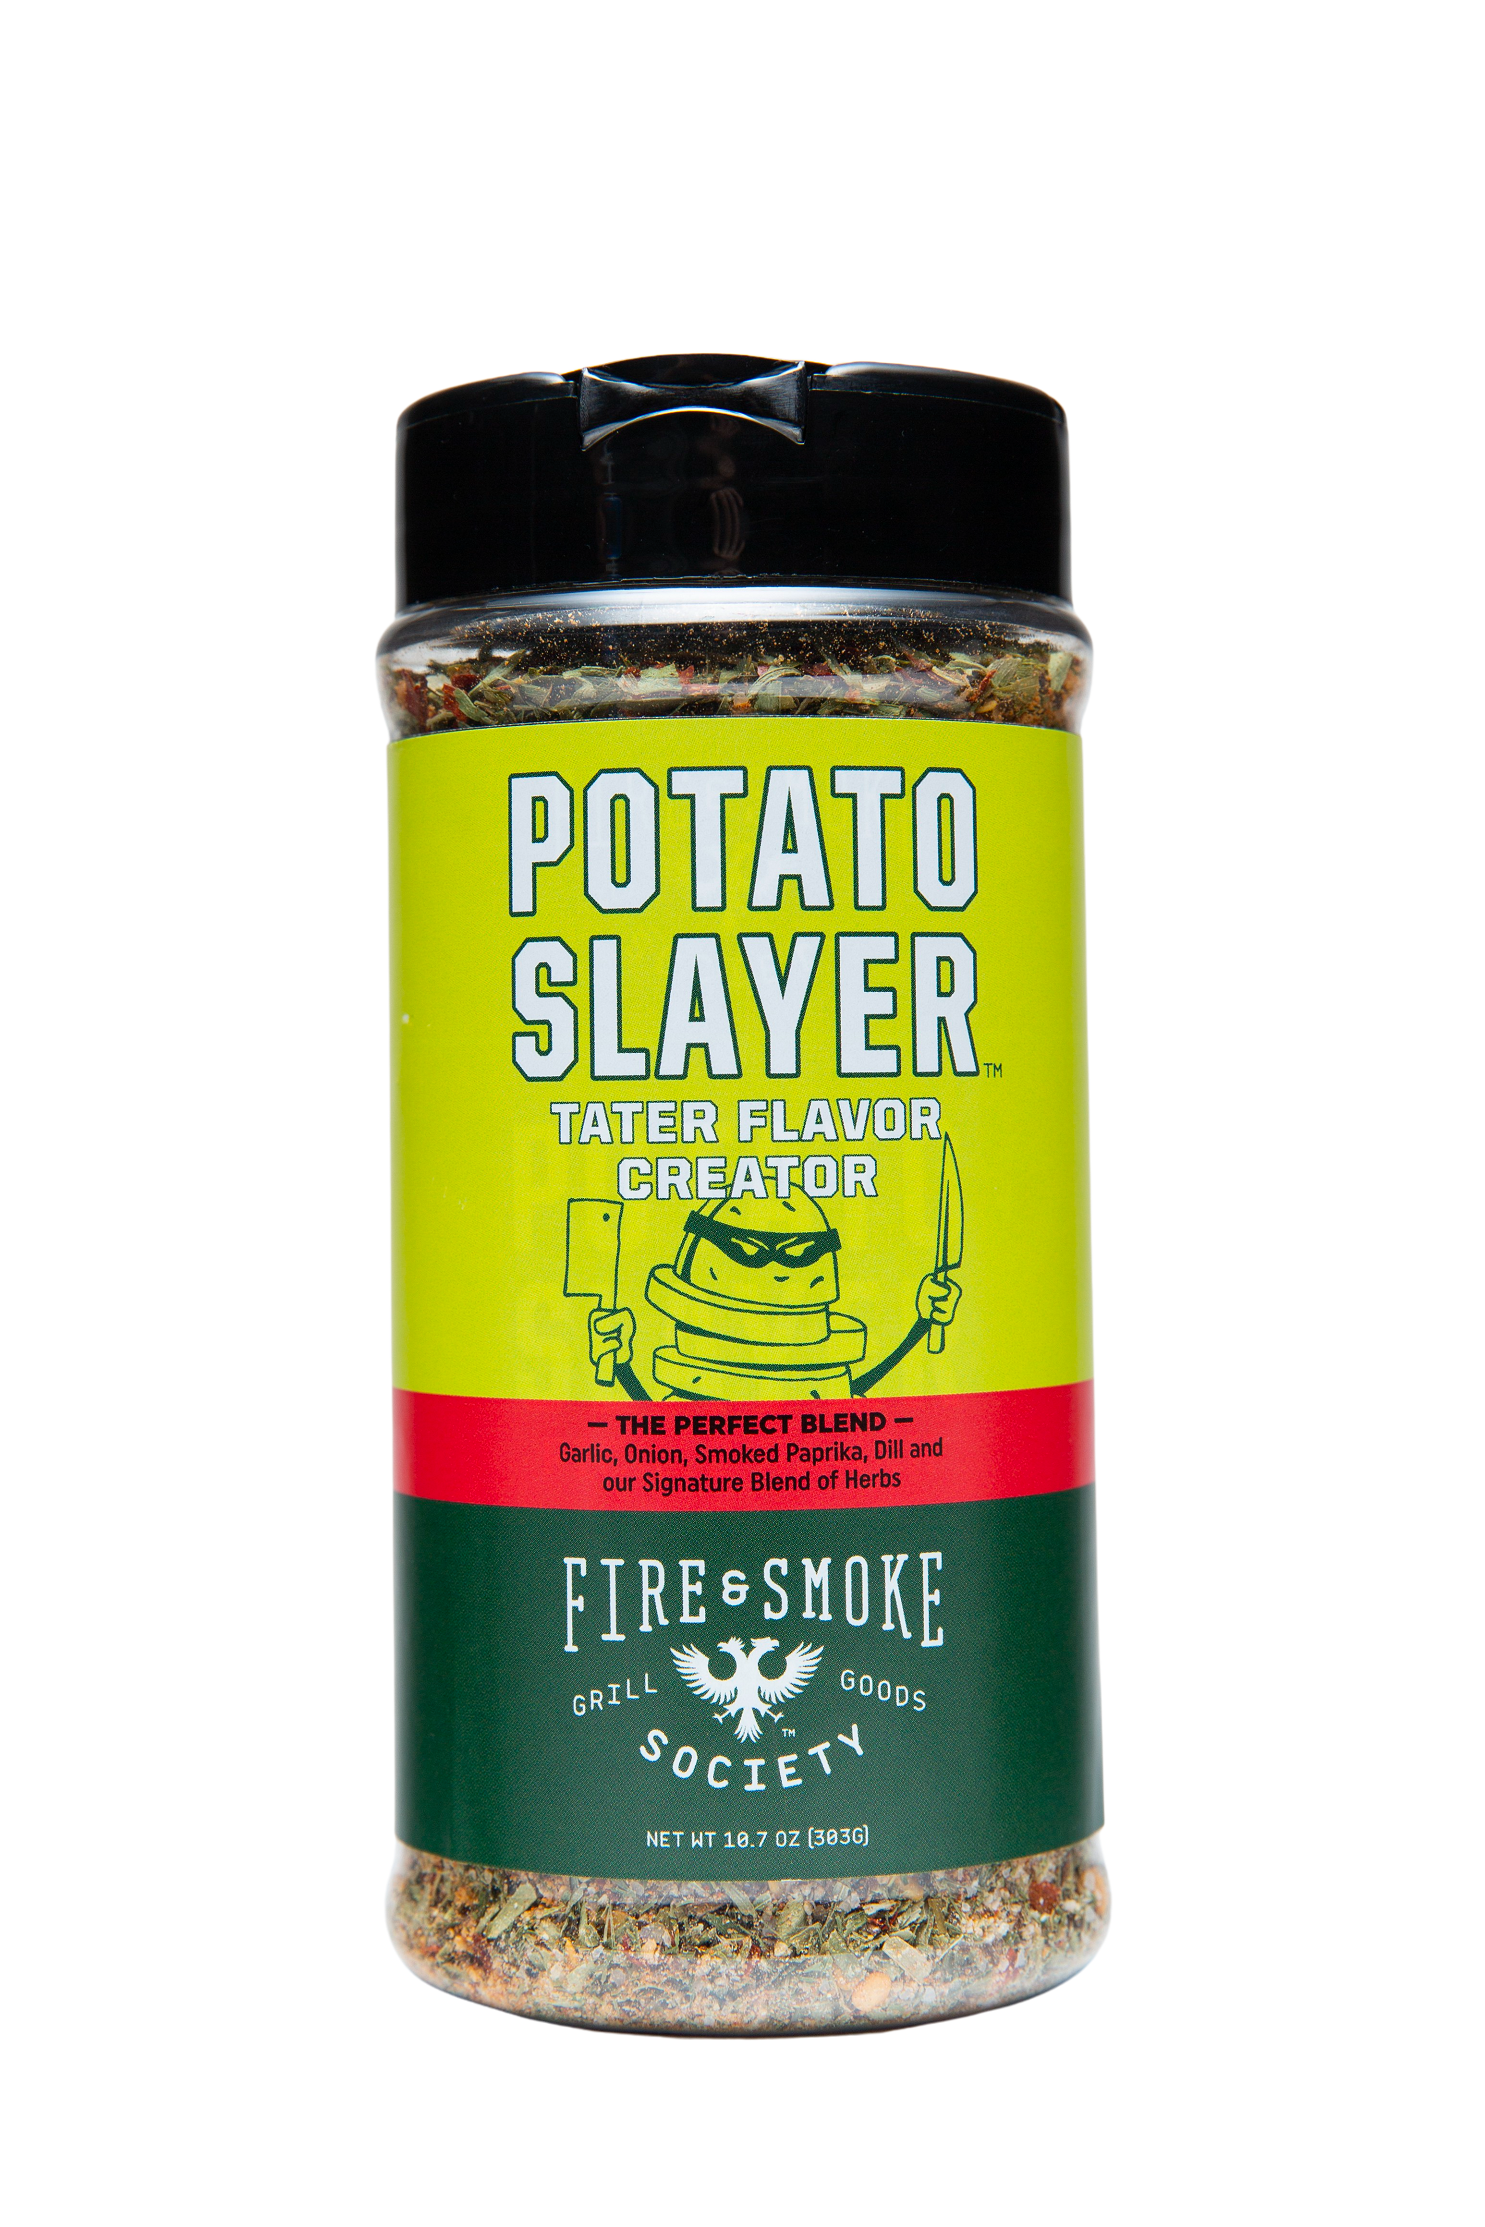 Fire & Smoke Society Potato Slayer Seasoning Blend